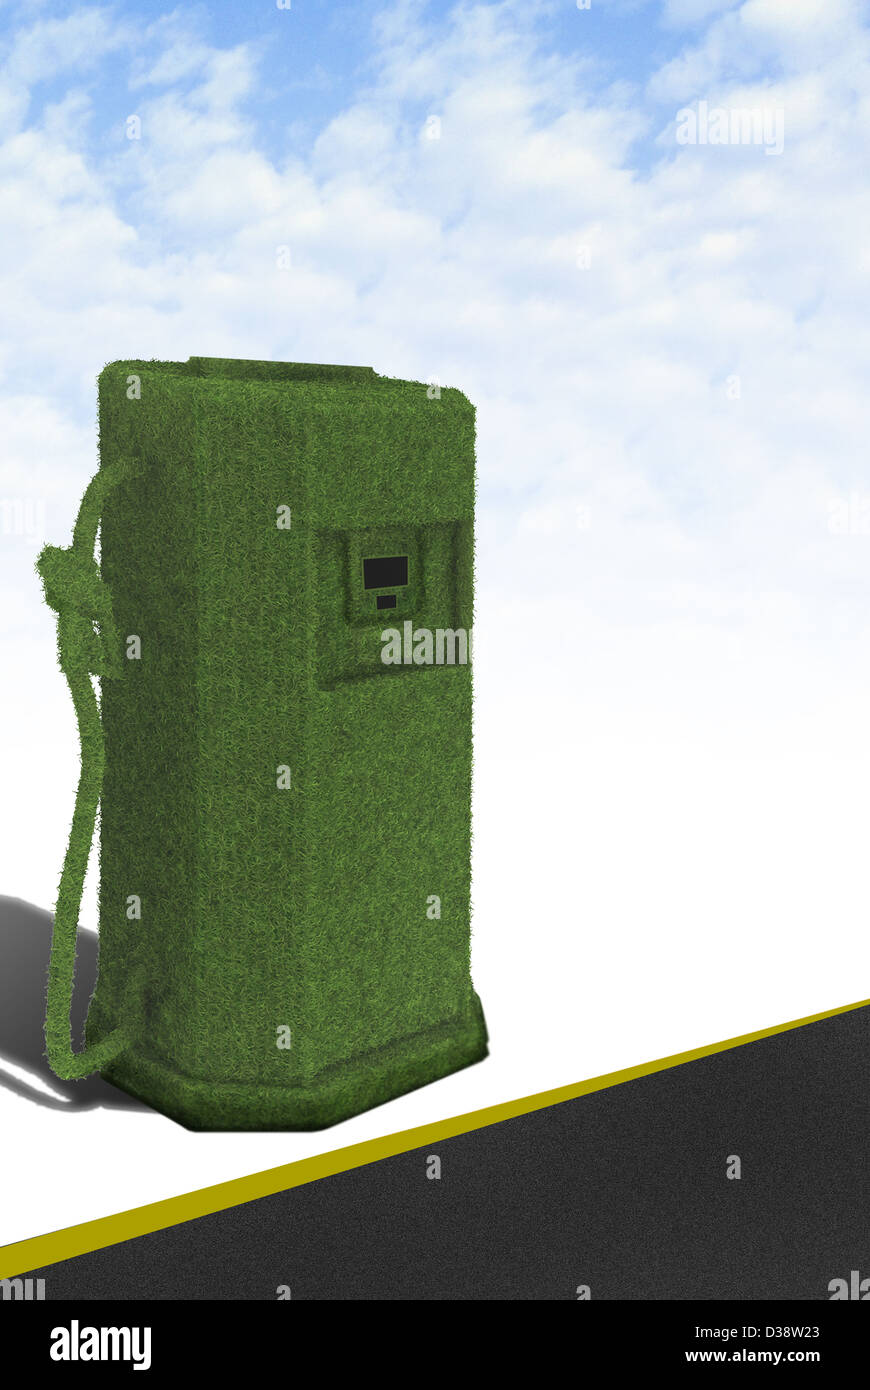 Grüne Biokraftstoff-Pumpe Stockfoto